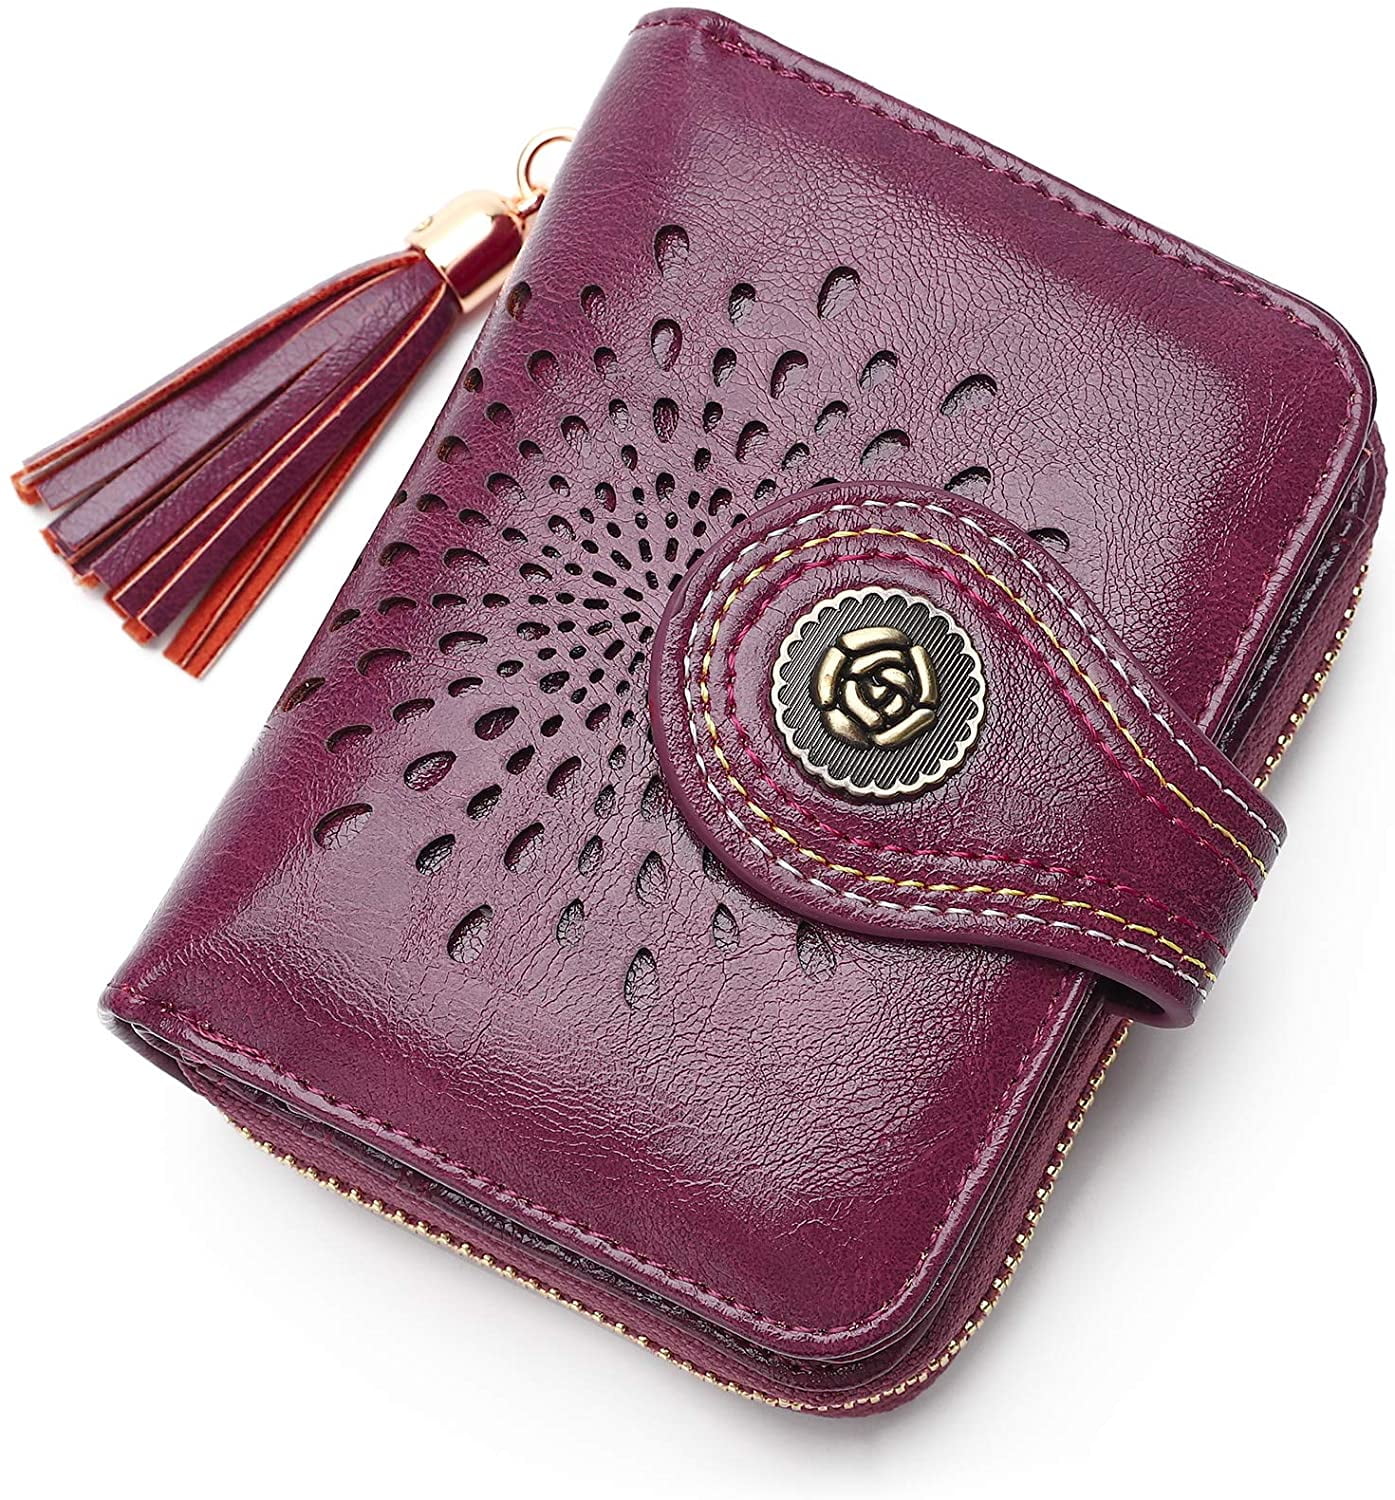 SENDEFN Womens RFID Blocking Leather Small Compact Bi-fold Zipper Pocket Wallet Card Case Purse with ID Window 